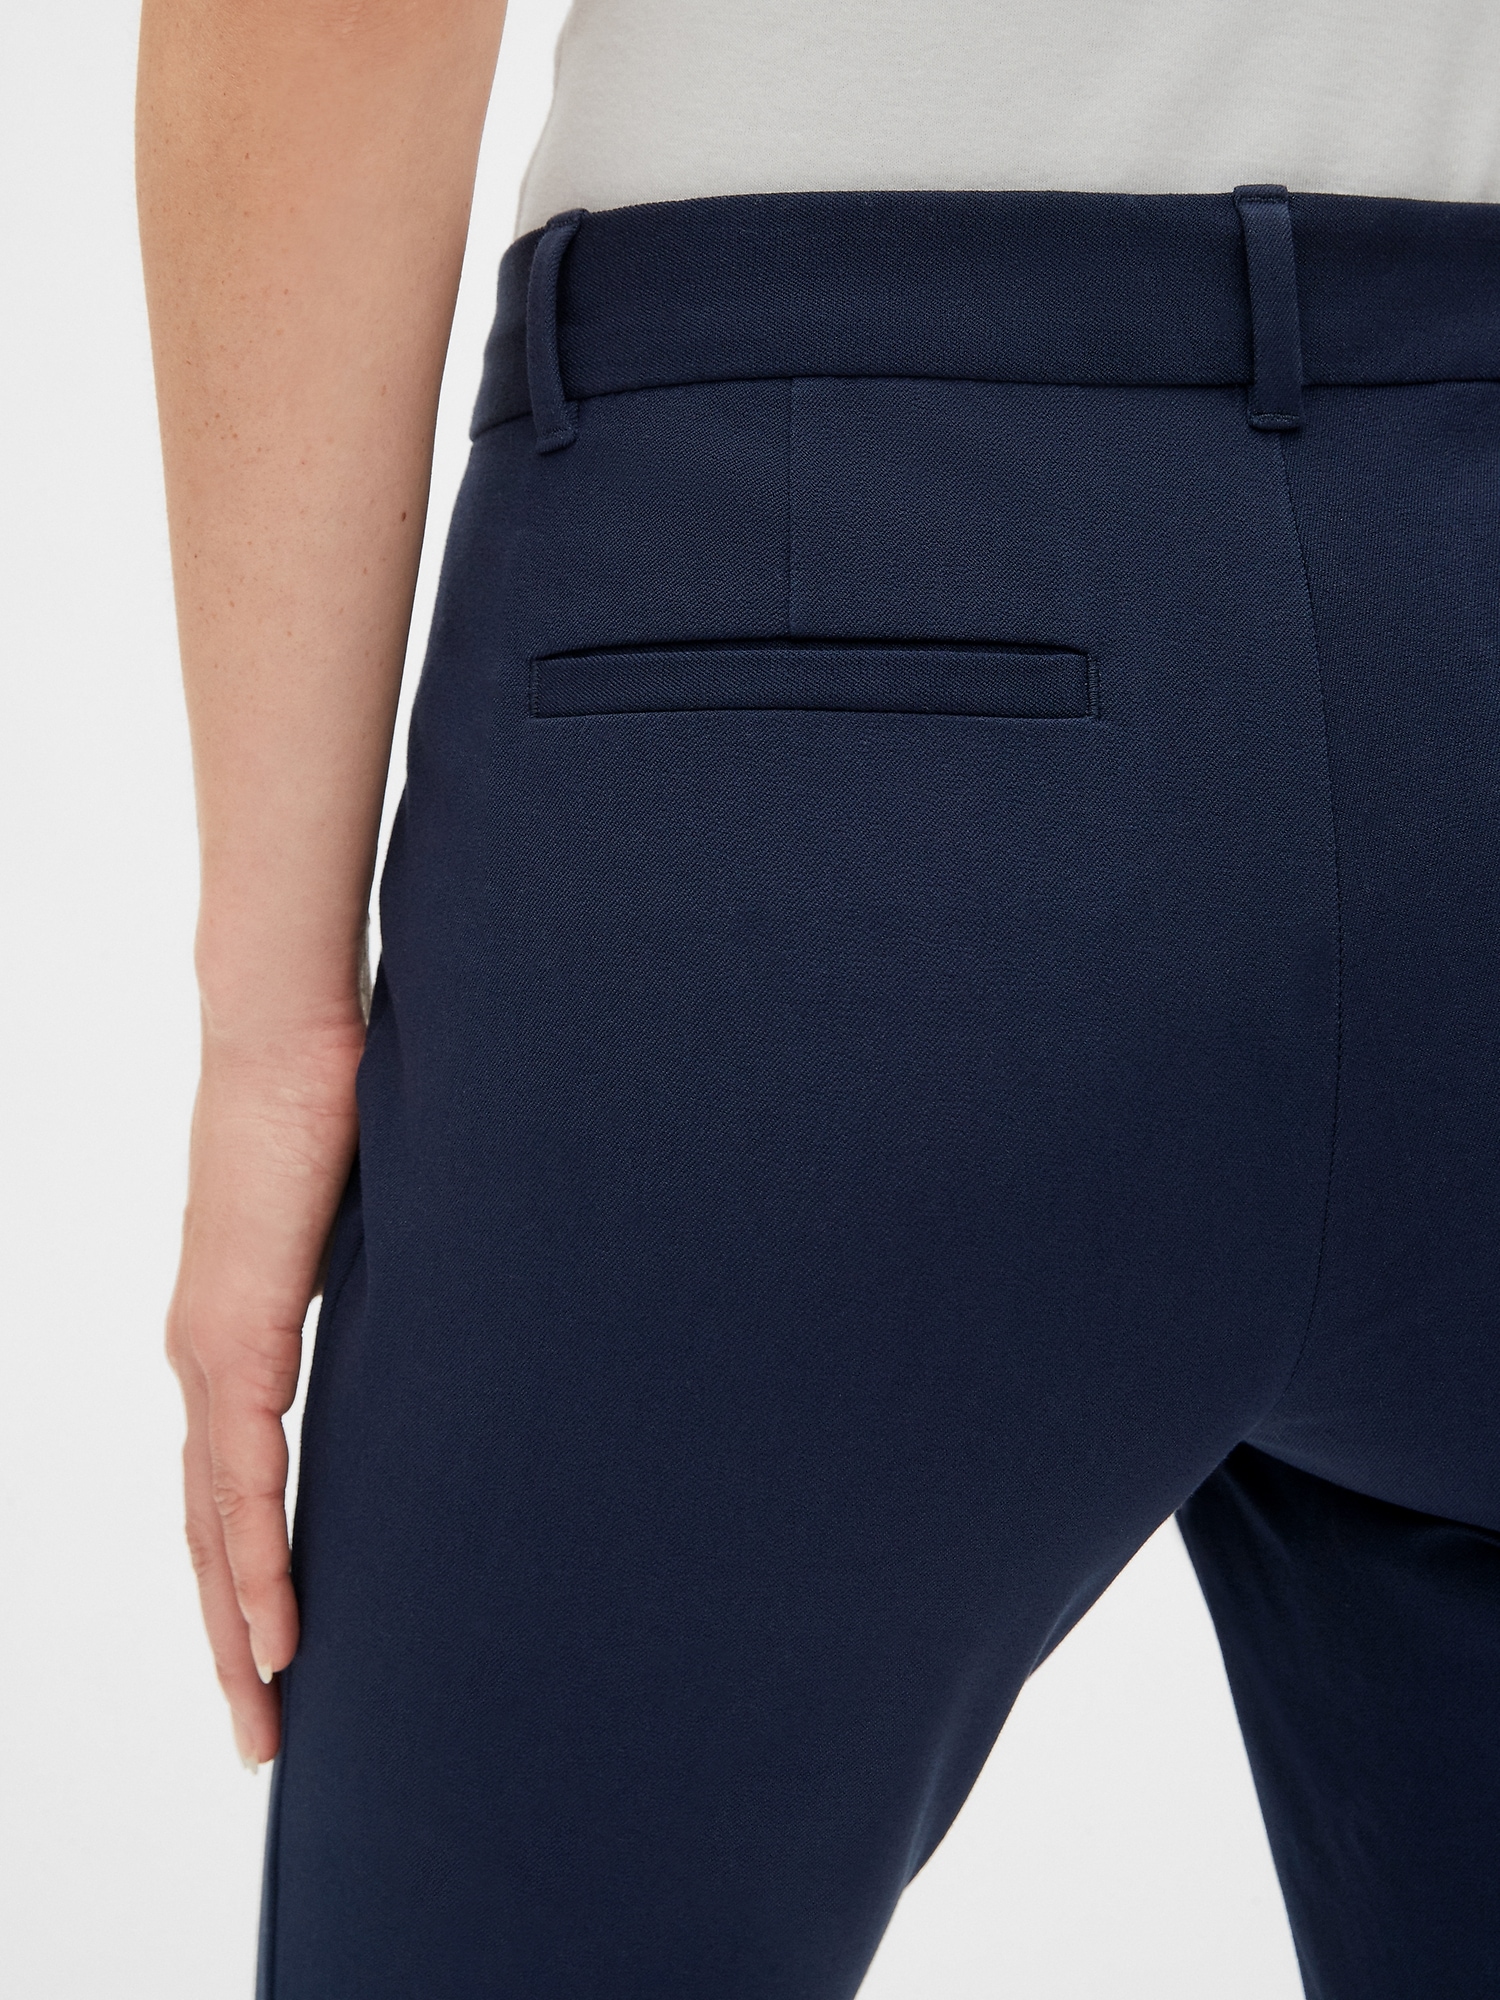 gap pants womens sale